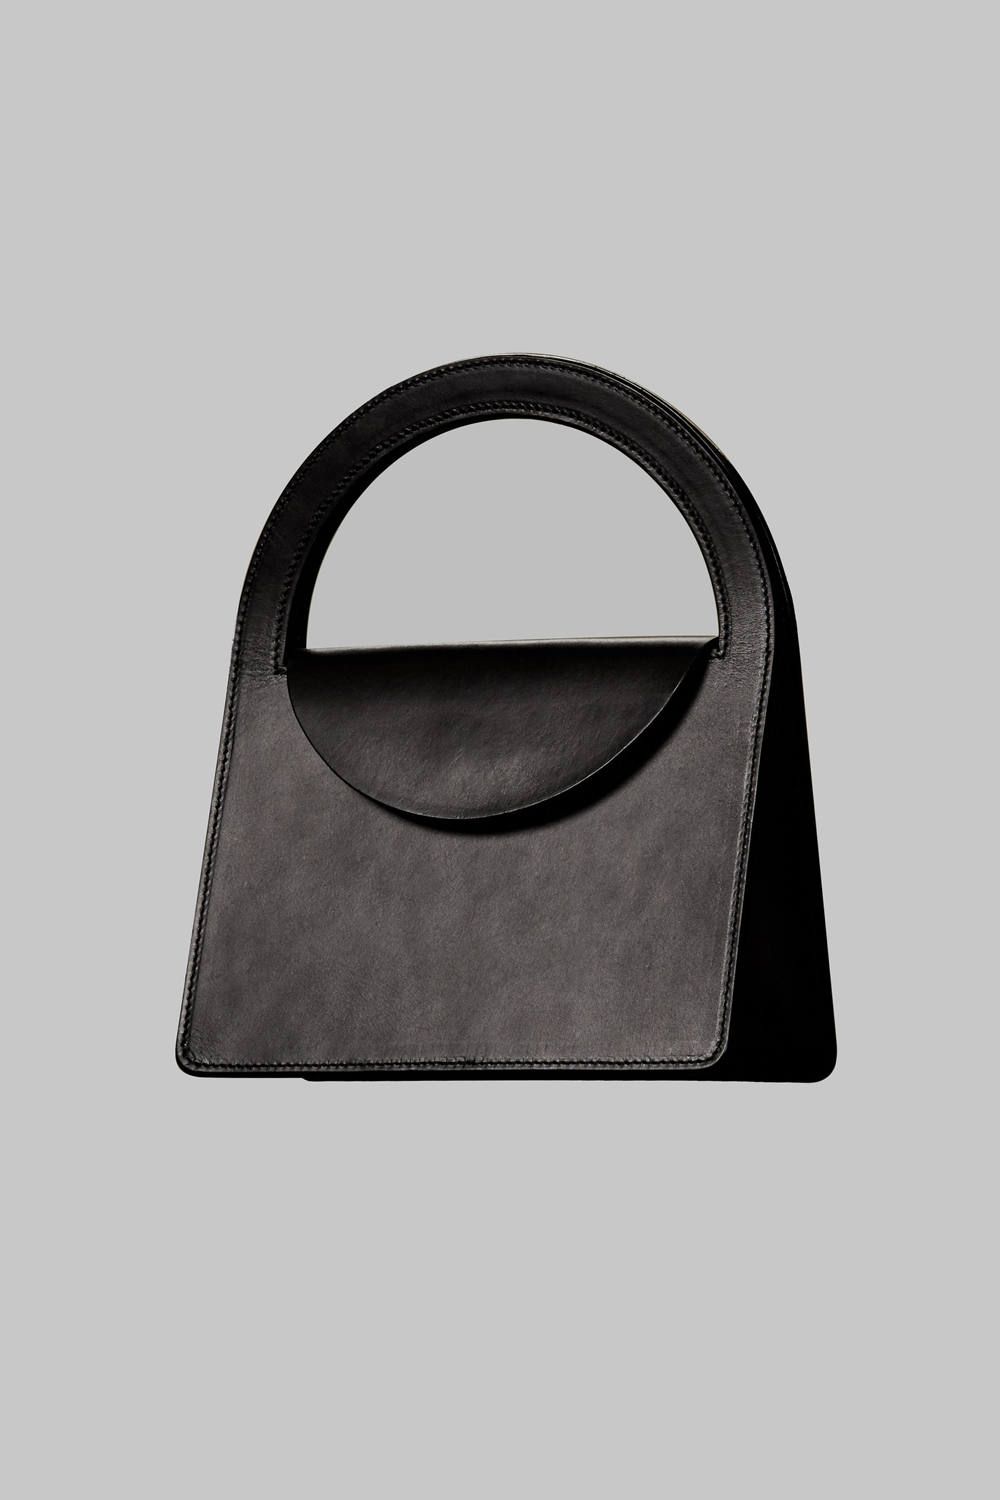 ZZMY Color Block Satchel Bag, Trendy Metal Tassel Decor, Women's Top Ring  Purse | eBay